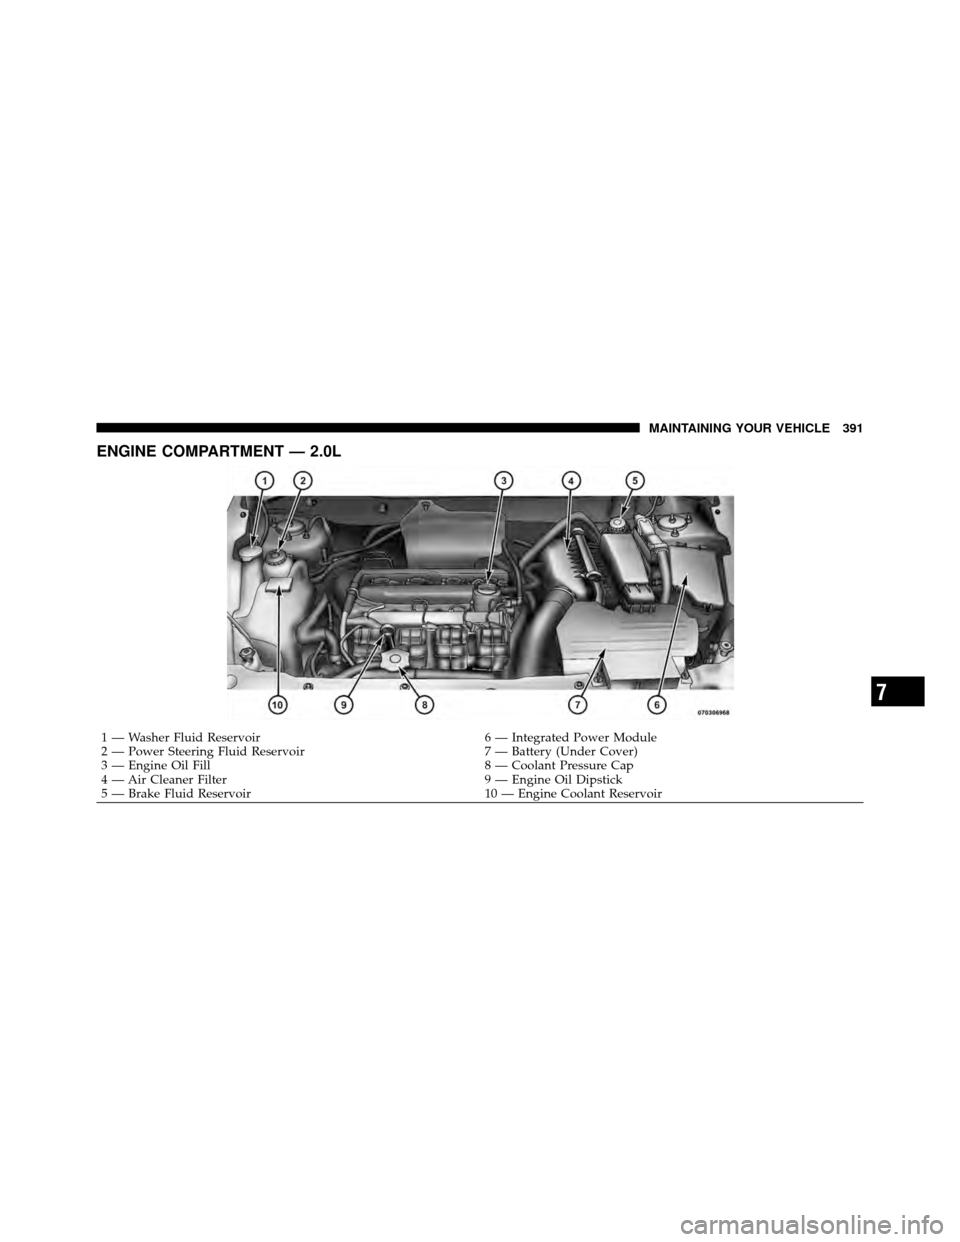 DODGE CALIBER 2010 1.G User Guide ENGINE COMPARTMENT — 2.0L
1 — Washer Fluid Reservoir6 — Integrated Power Module
2 — Power Steering Fluid Reservoir 7 — Battery (Under Cover)
3 — Engine Oil Fill 8 — Coolant Pressure Cap
